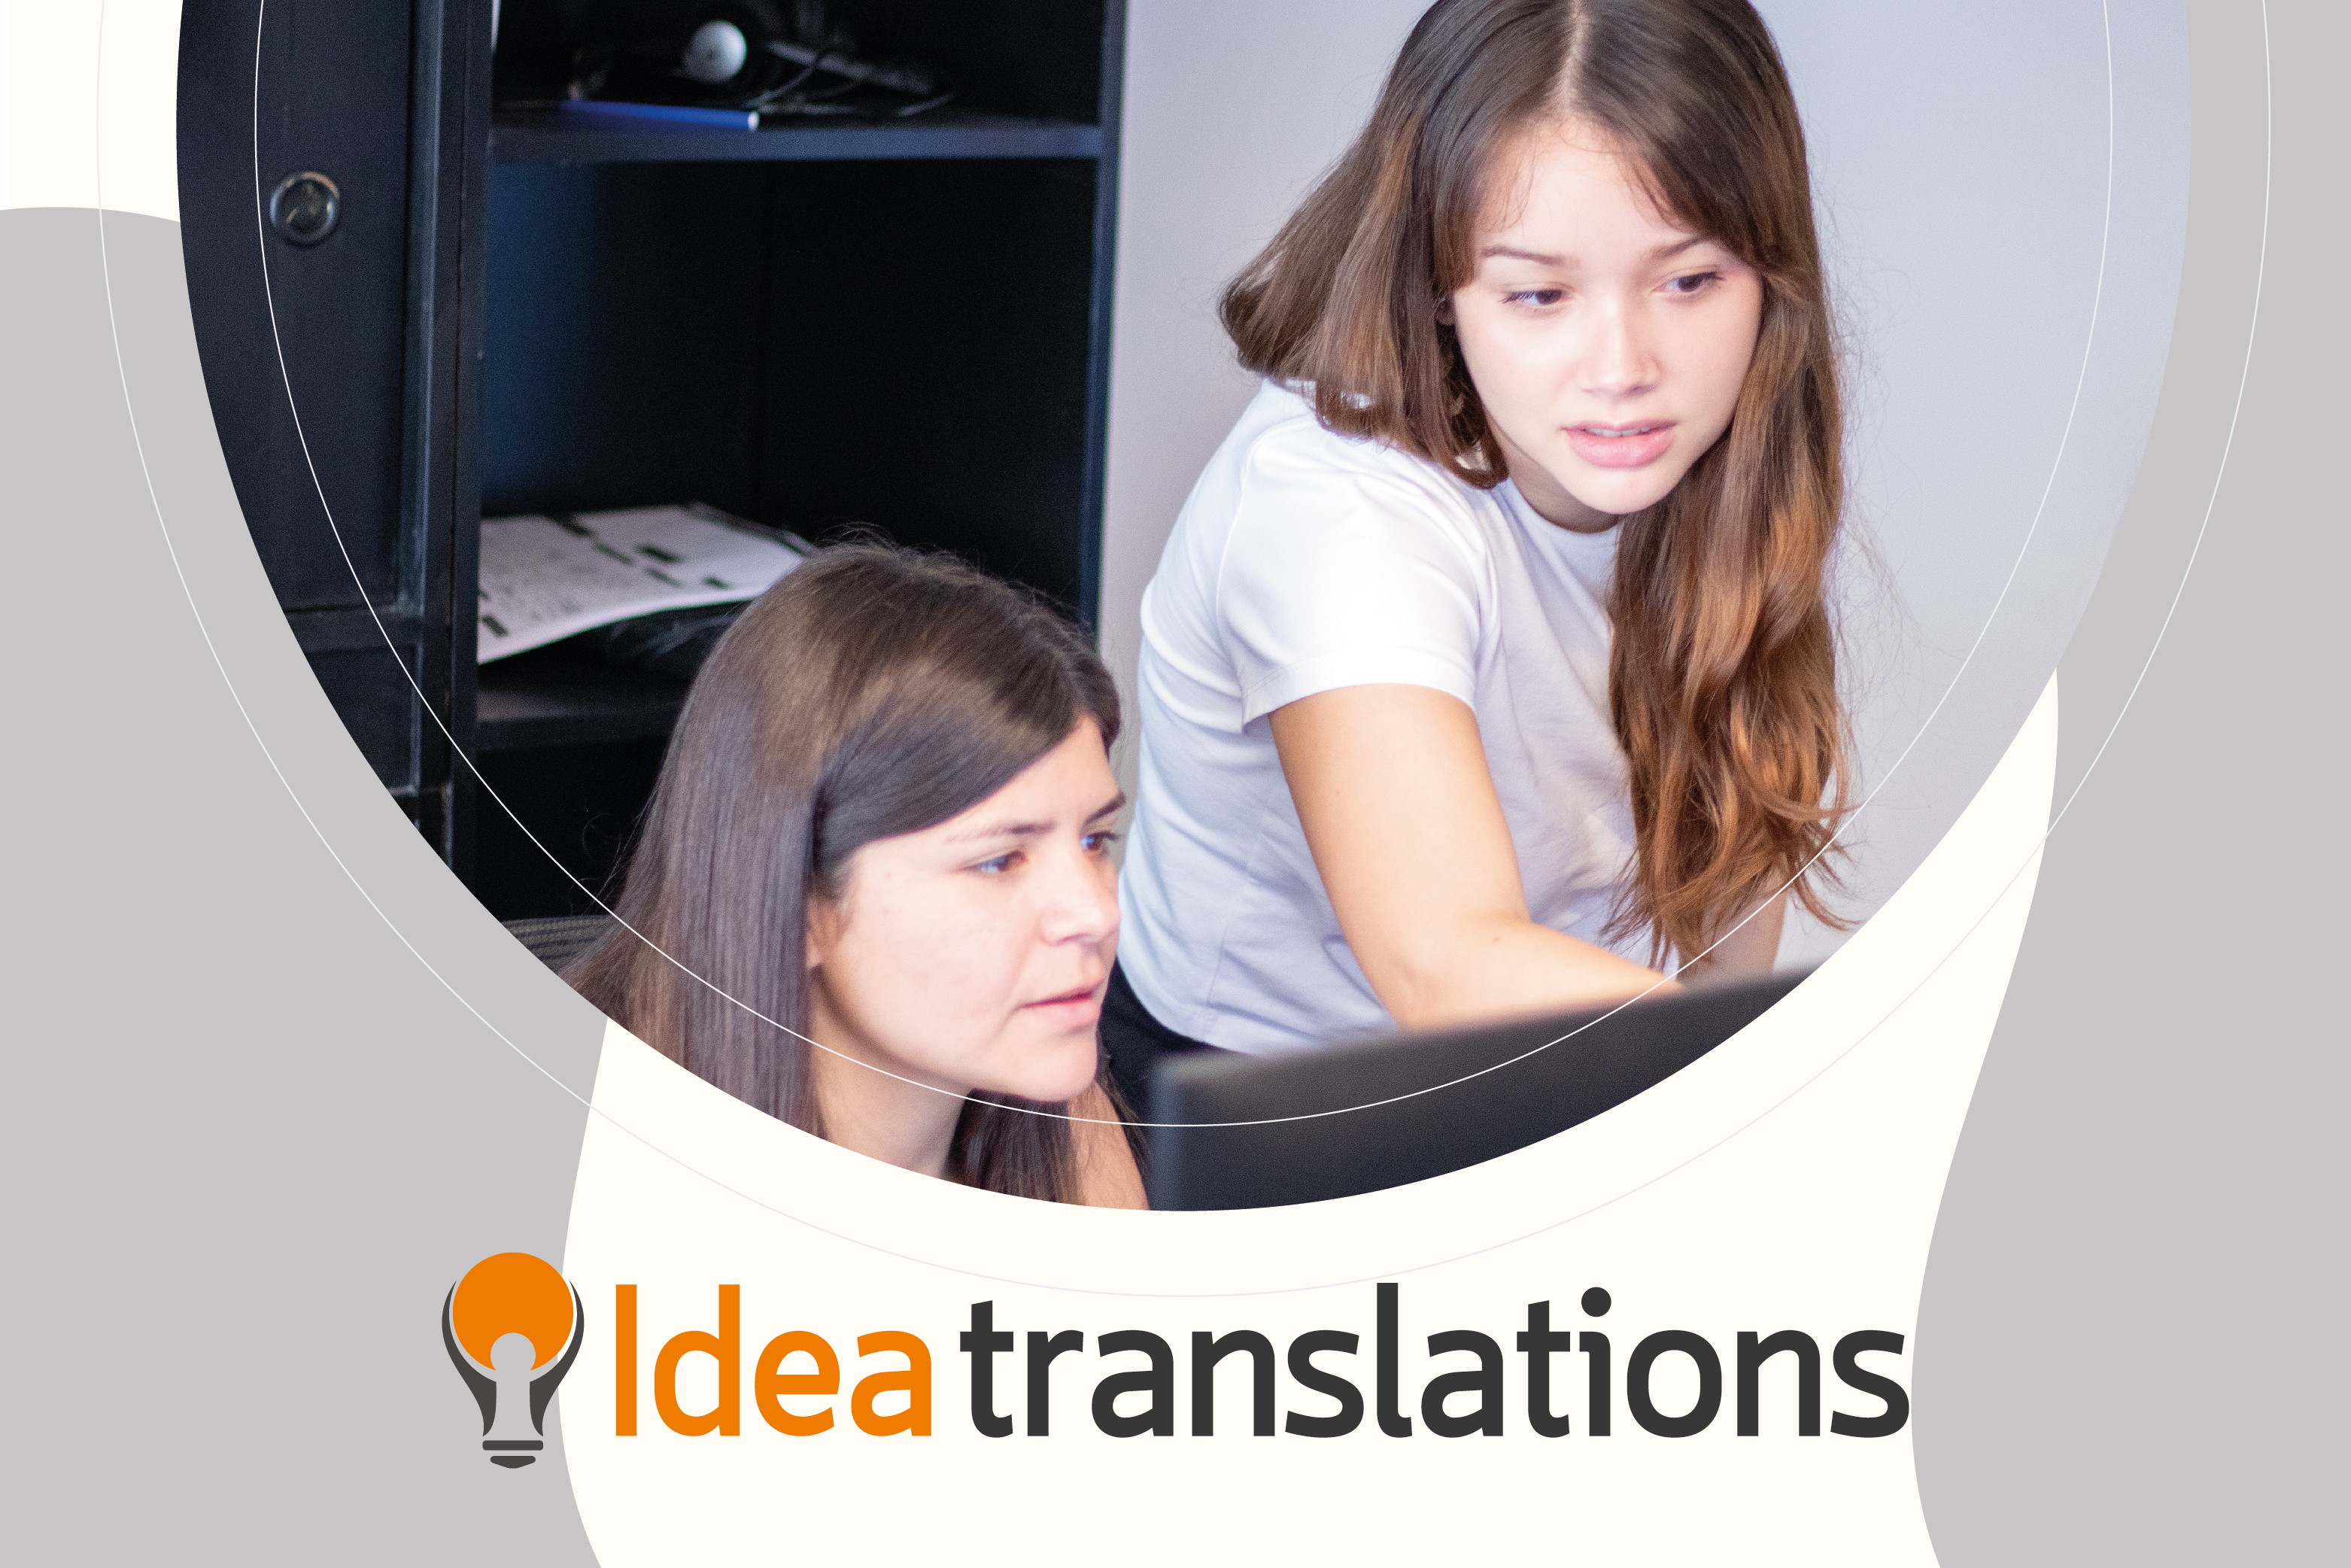 Why Choose Idea Translations as a Strategic Partner